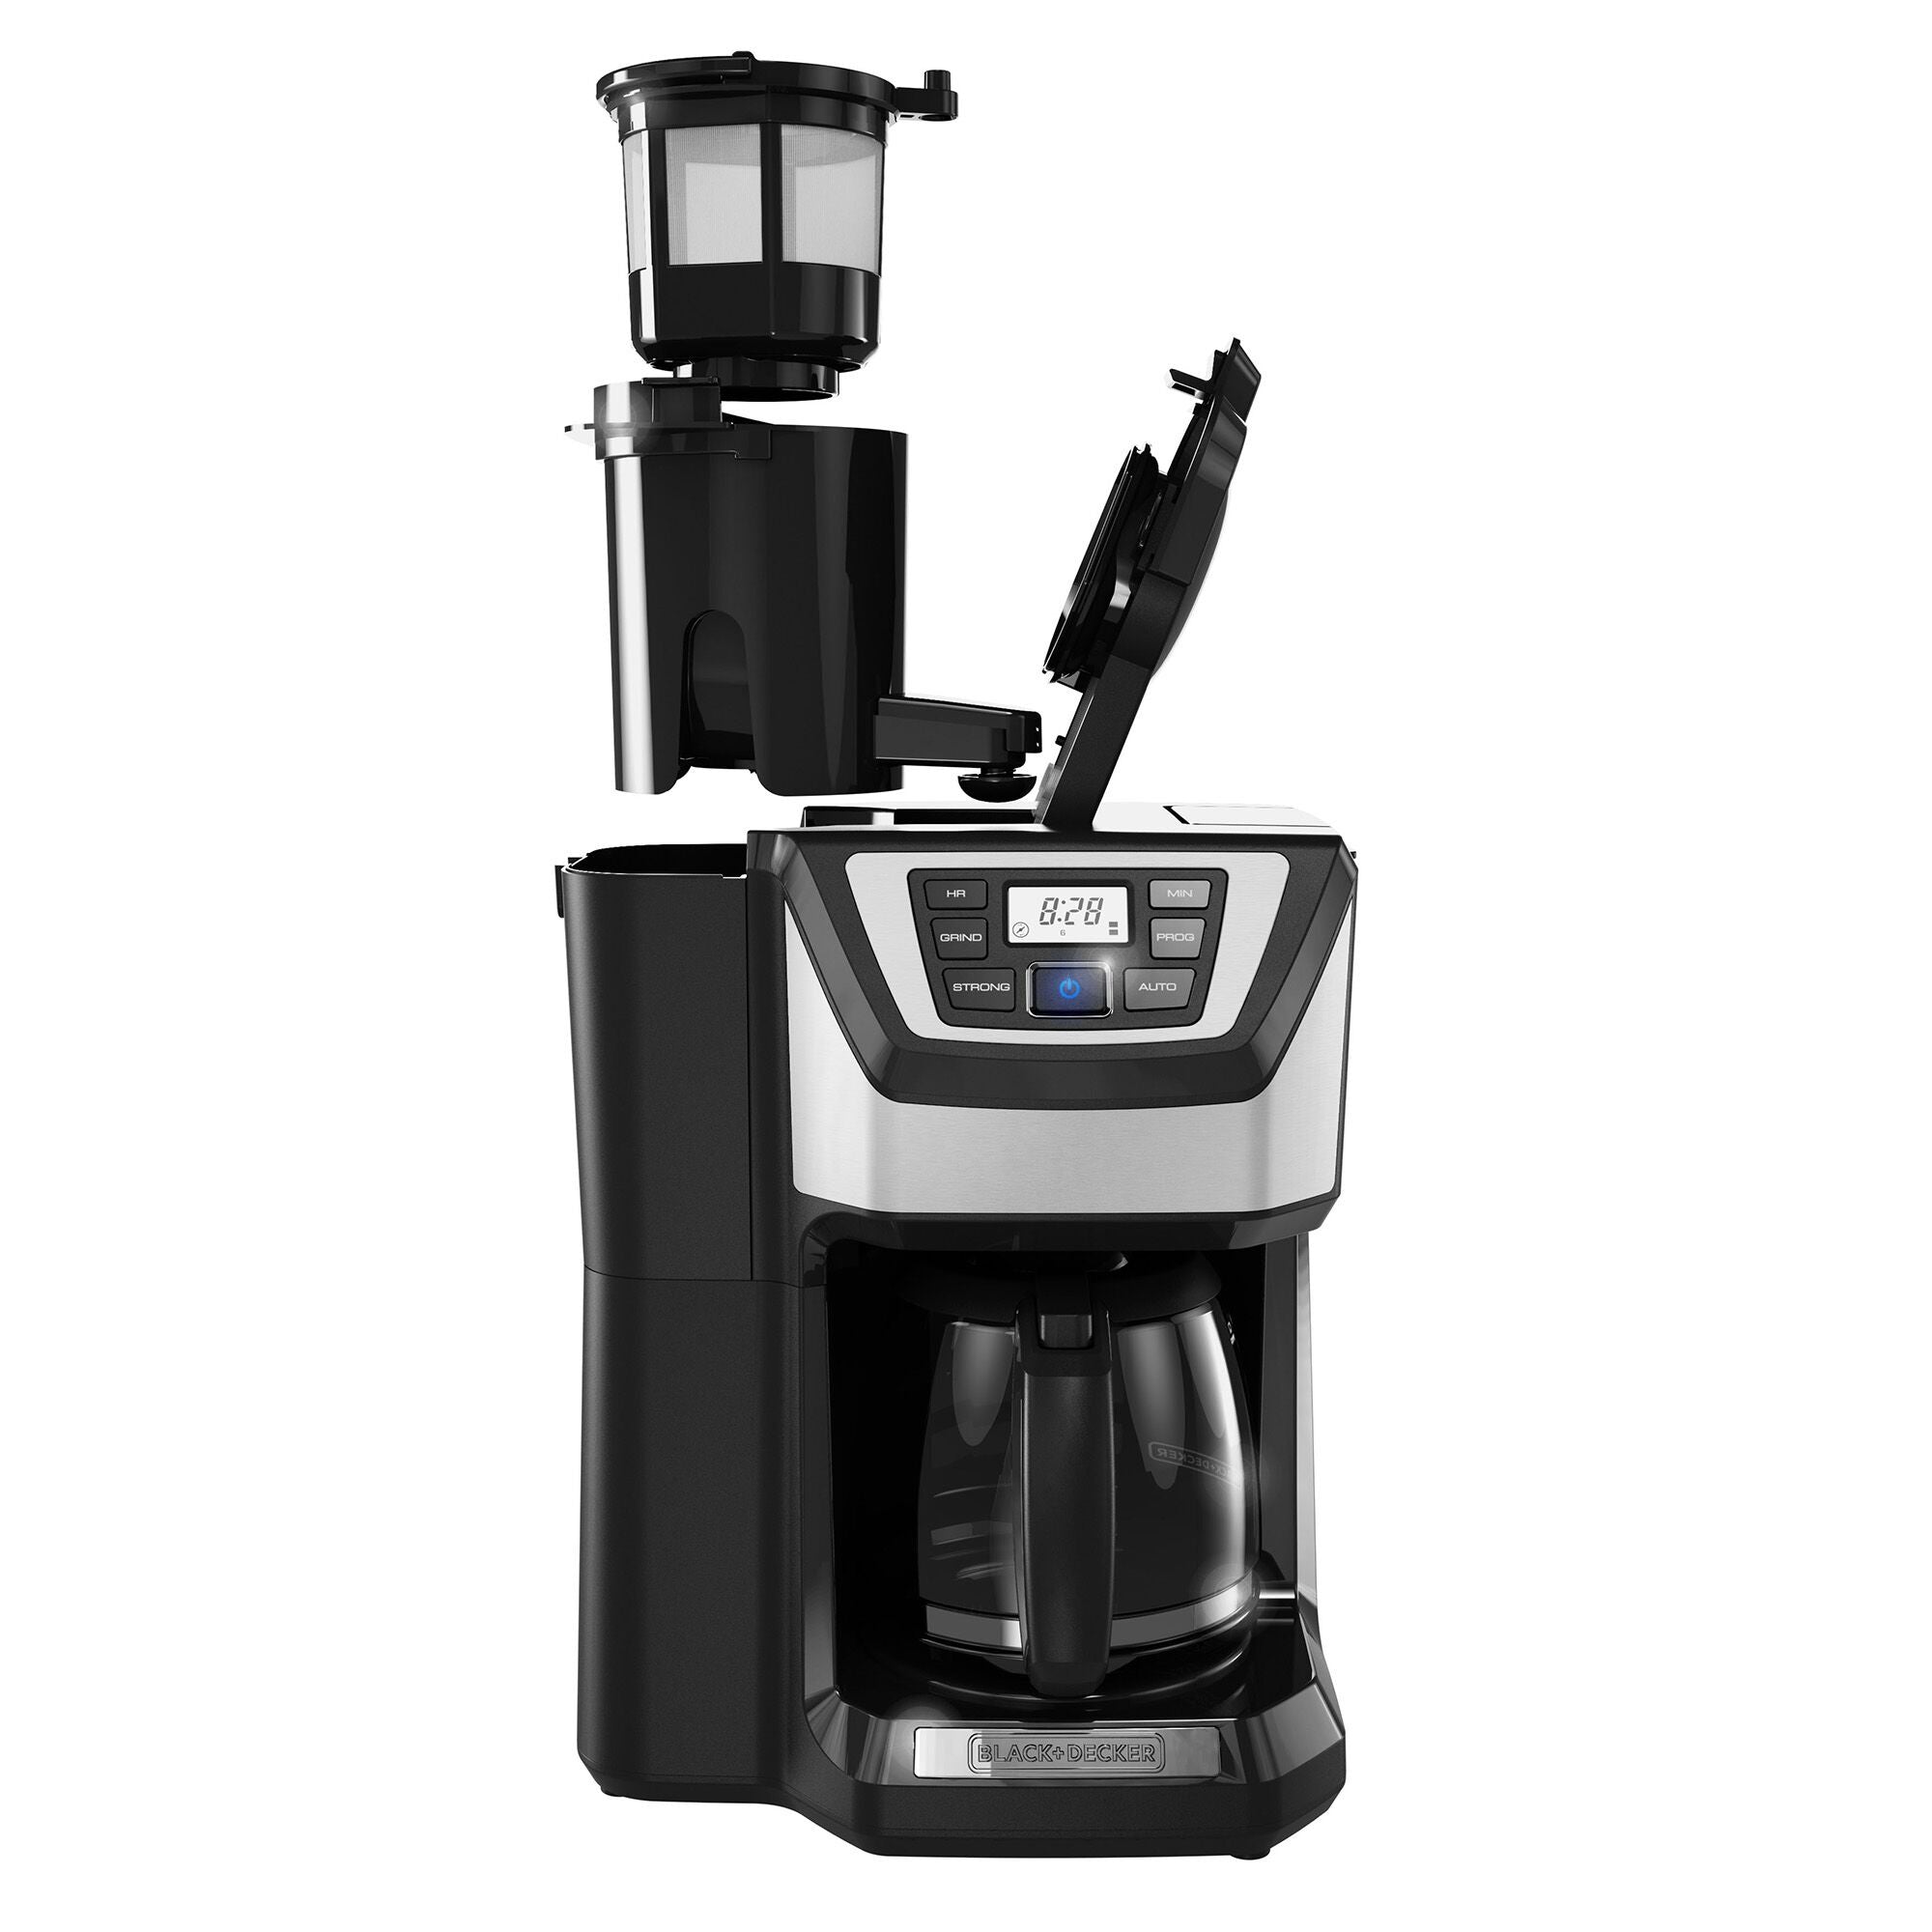 Mill & Brew 12-Cup* Coffee Maker - Black